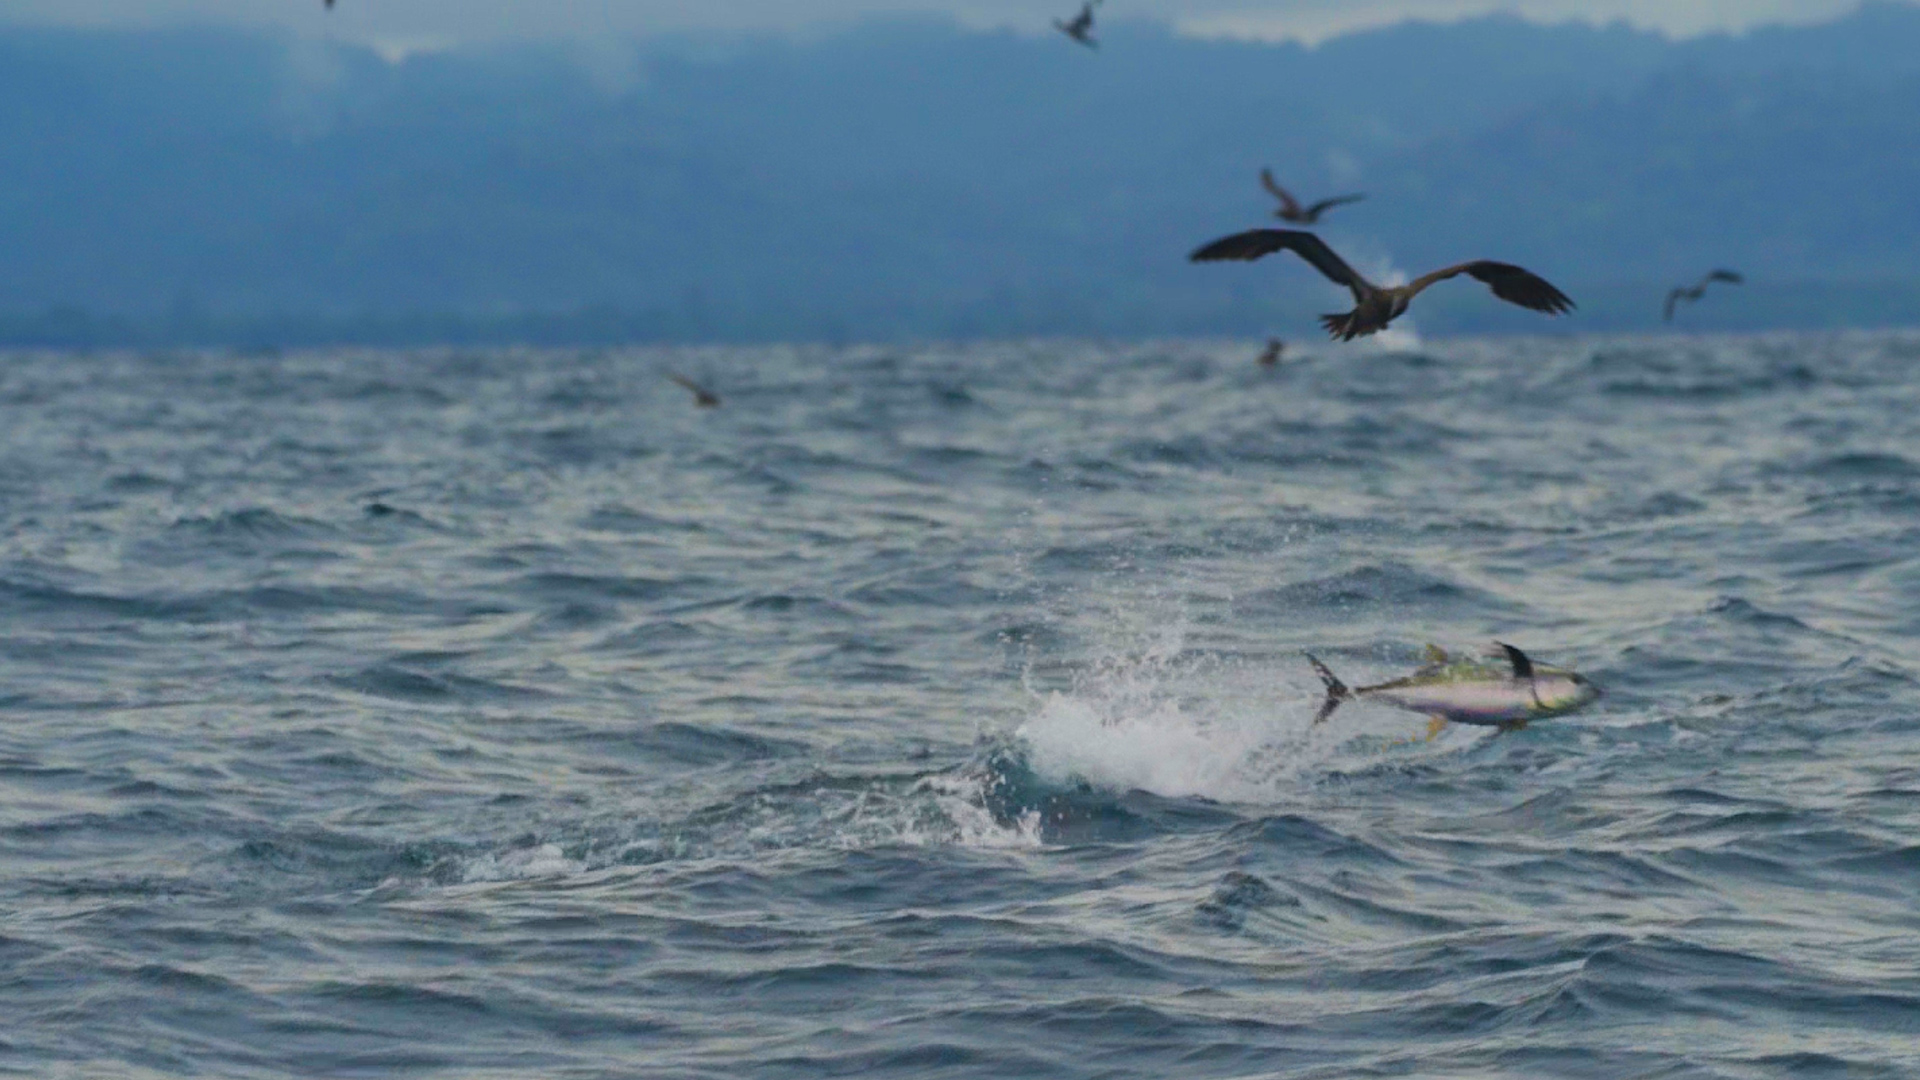 tuna drone footage in Costa Rica